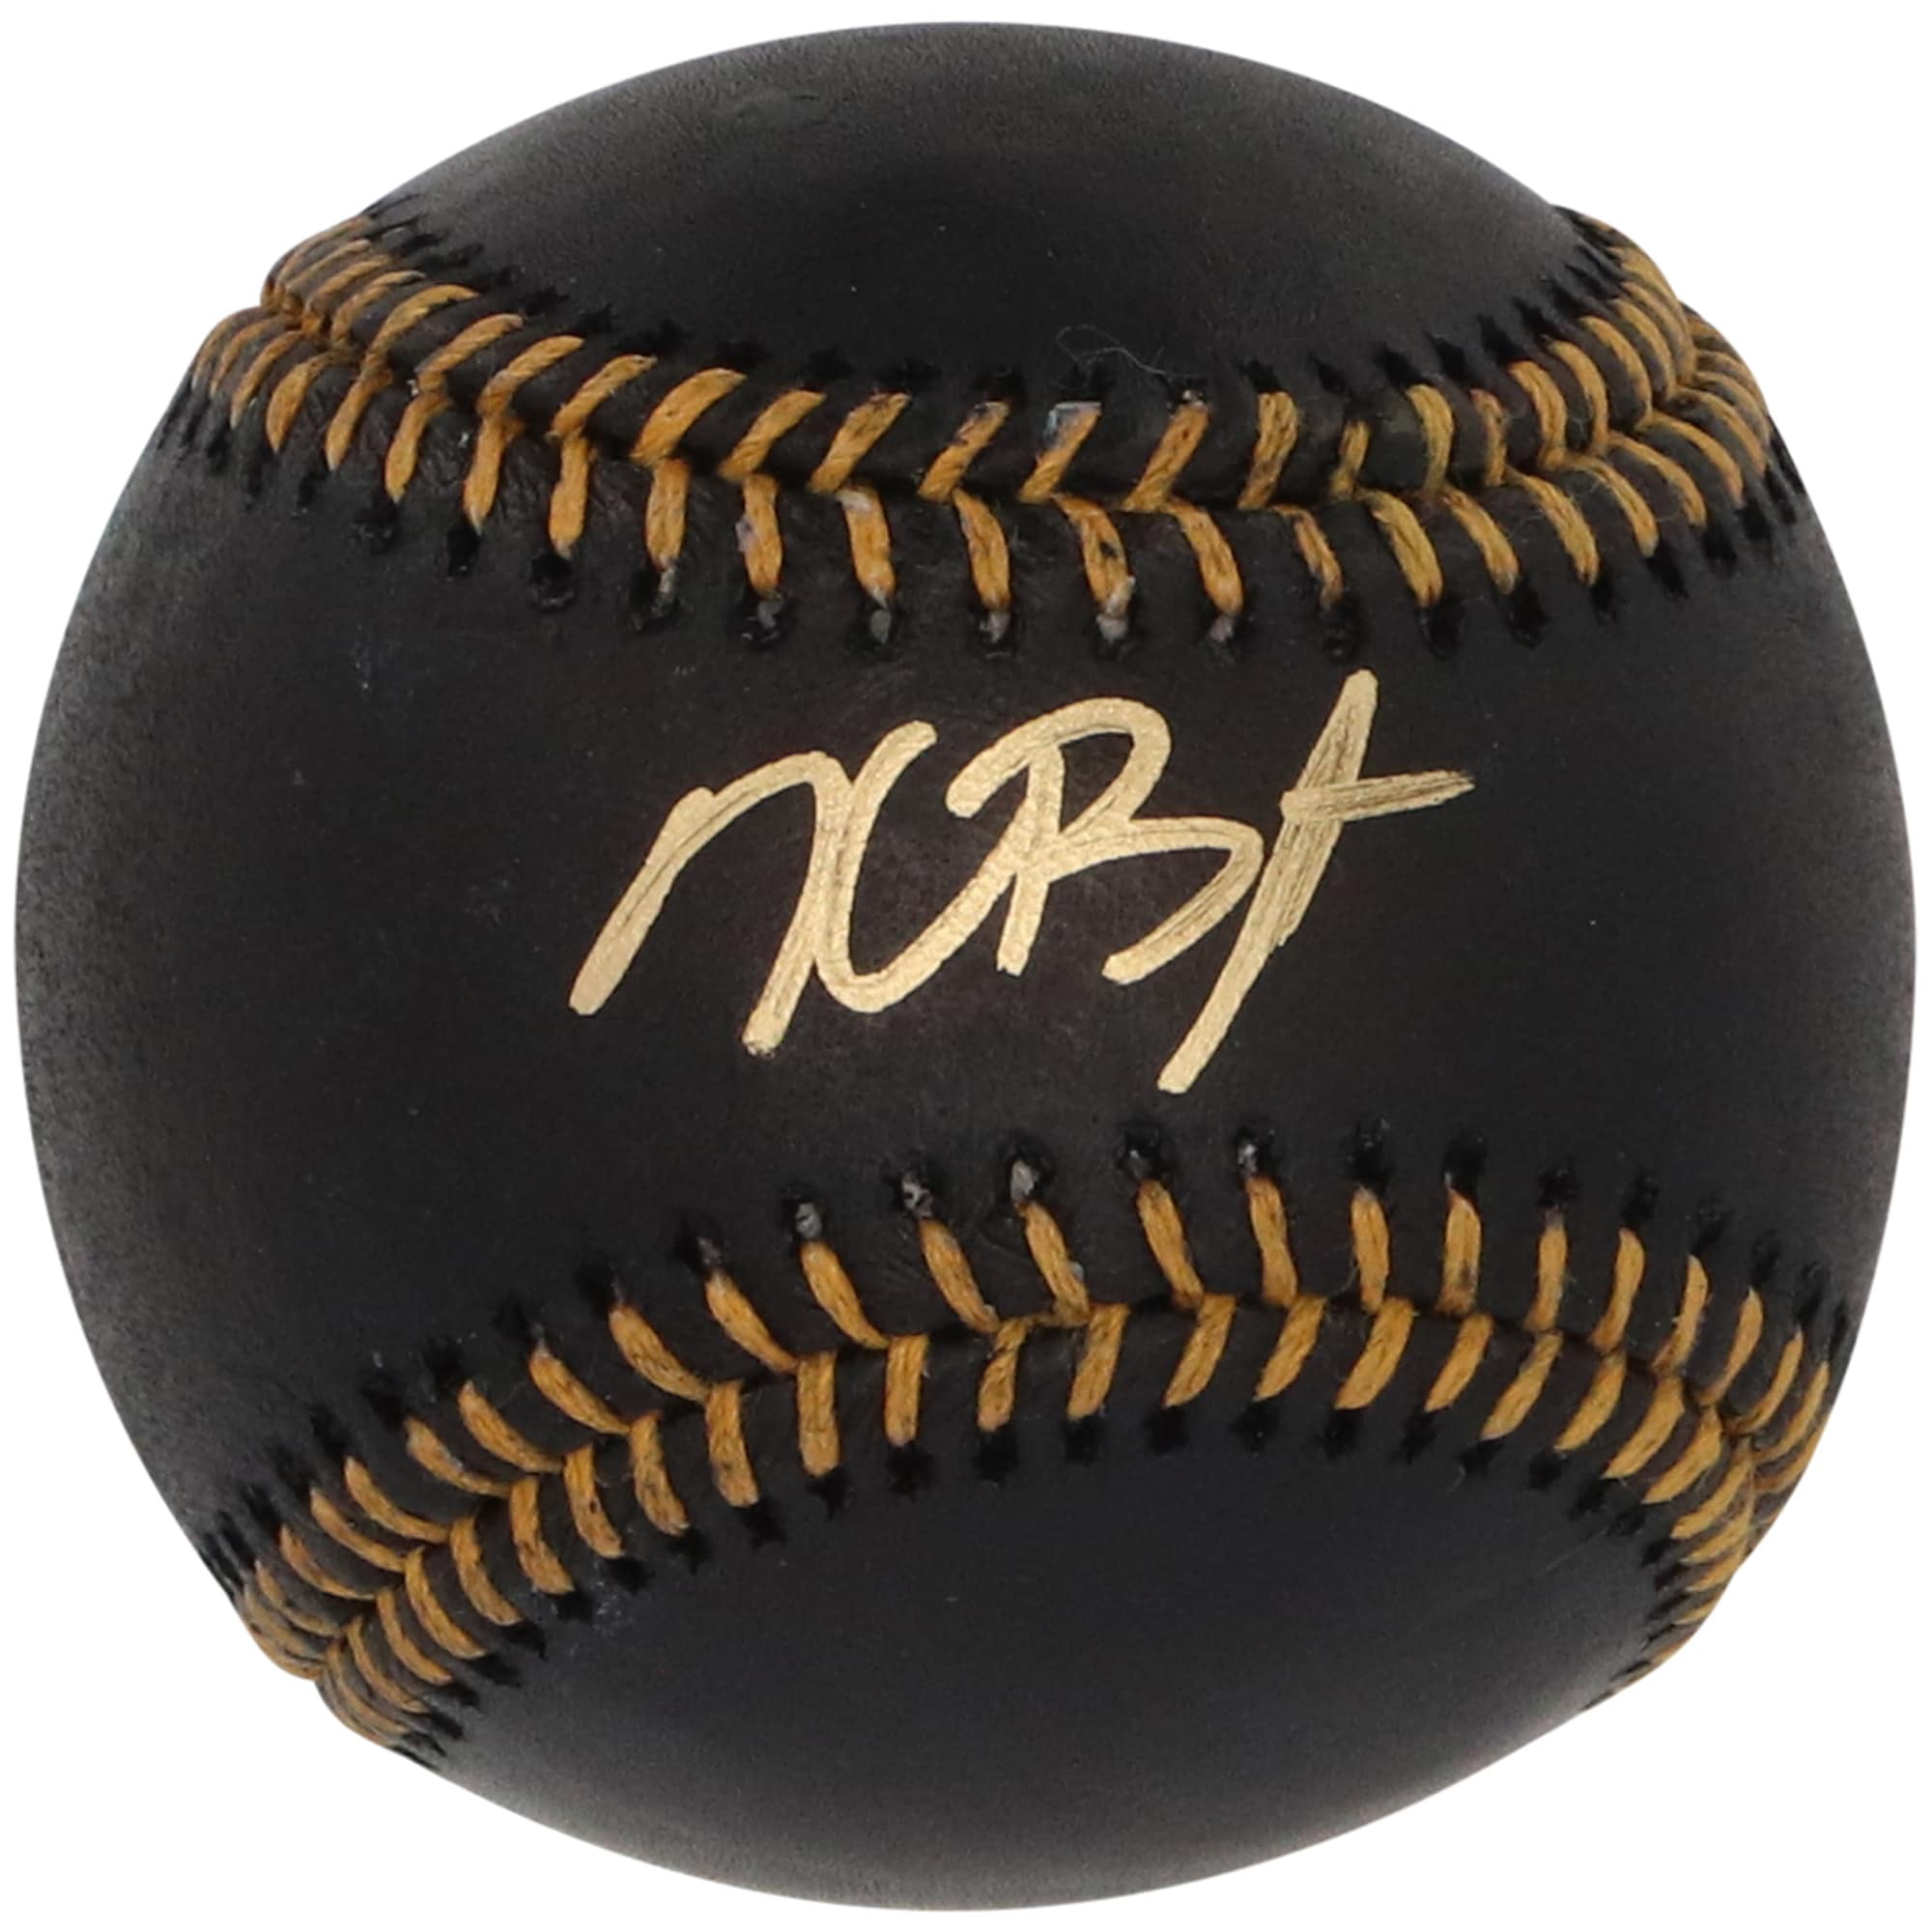 Franklin Sports MLB Slingbak - Compact Baseball Bag - Youth + Tball  Equipment Carry Bag - Black + Optic